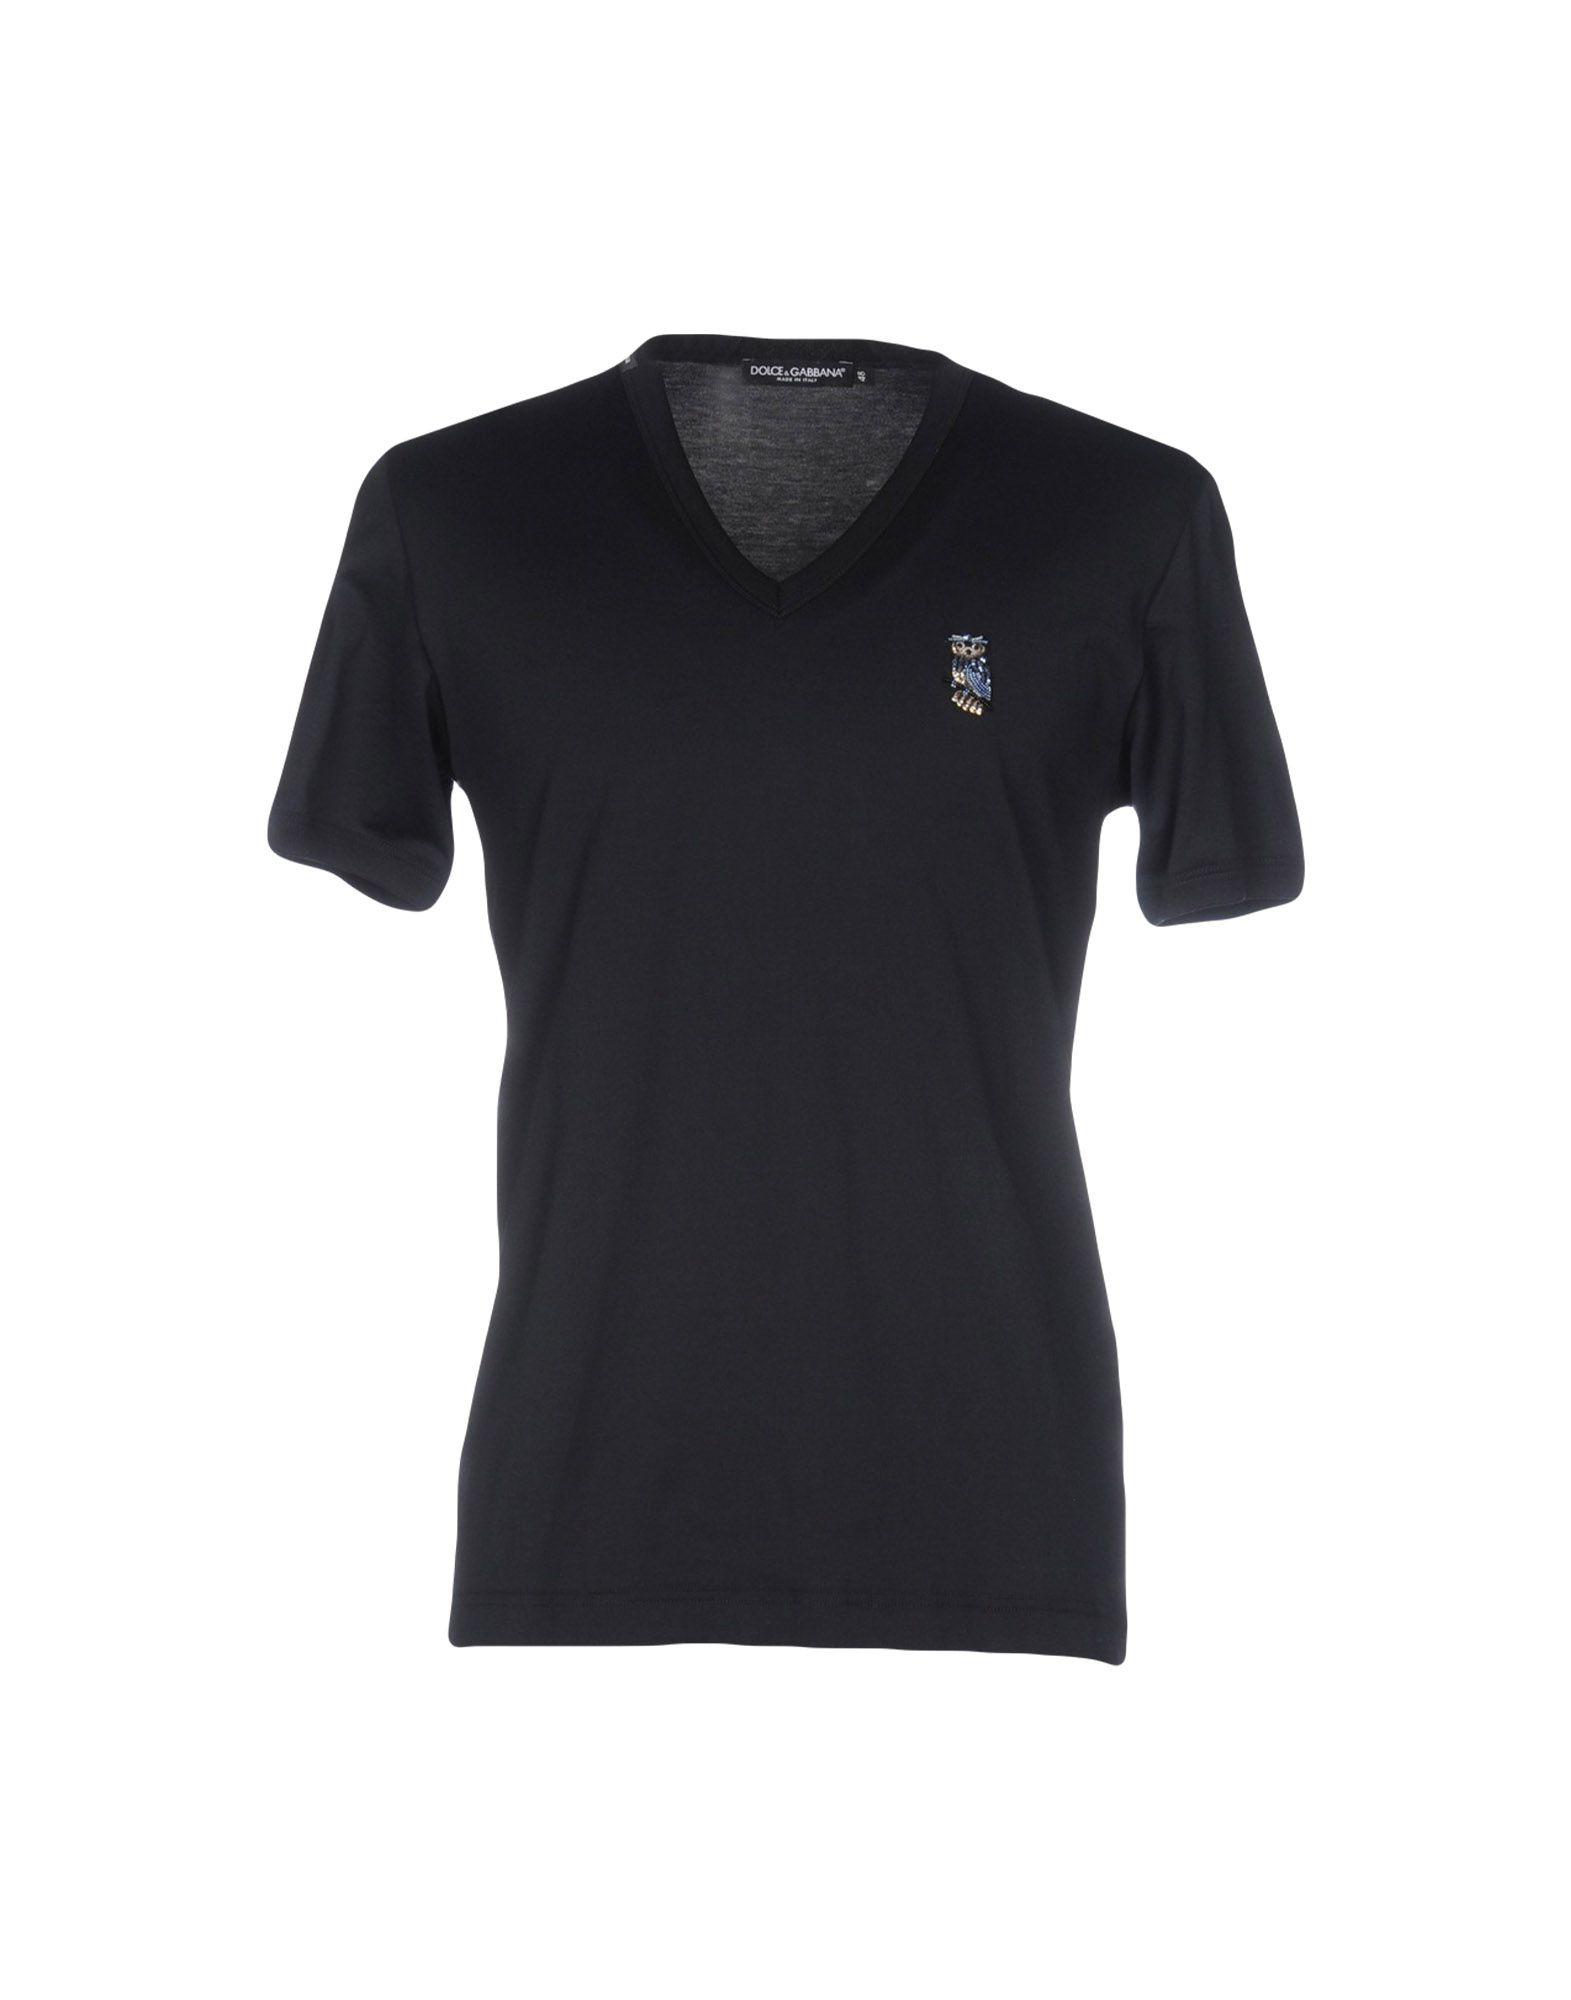 Lyst - Dolce & gabbana T-shirt in Blue for Men